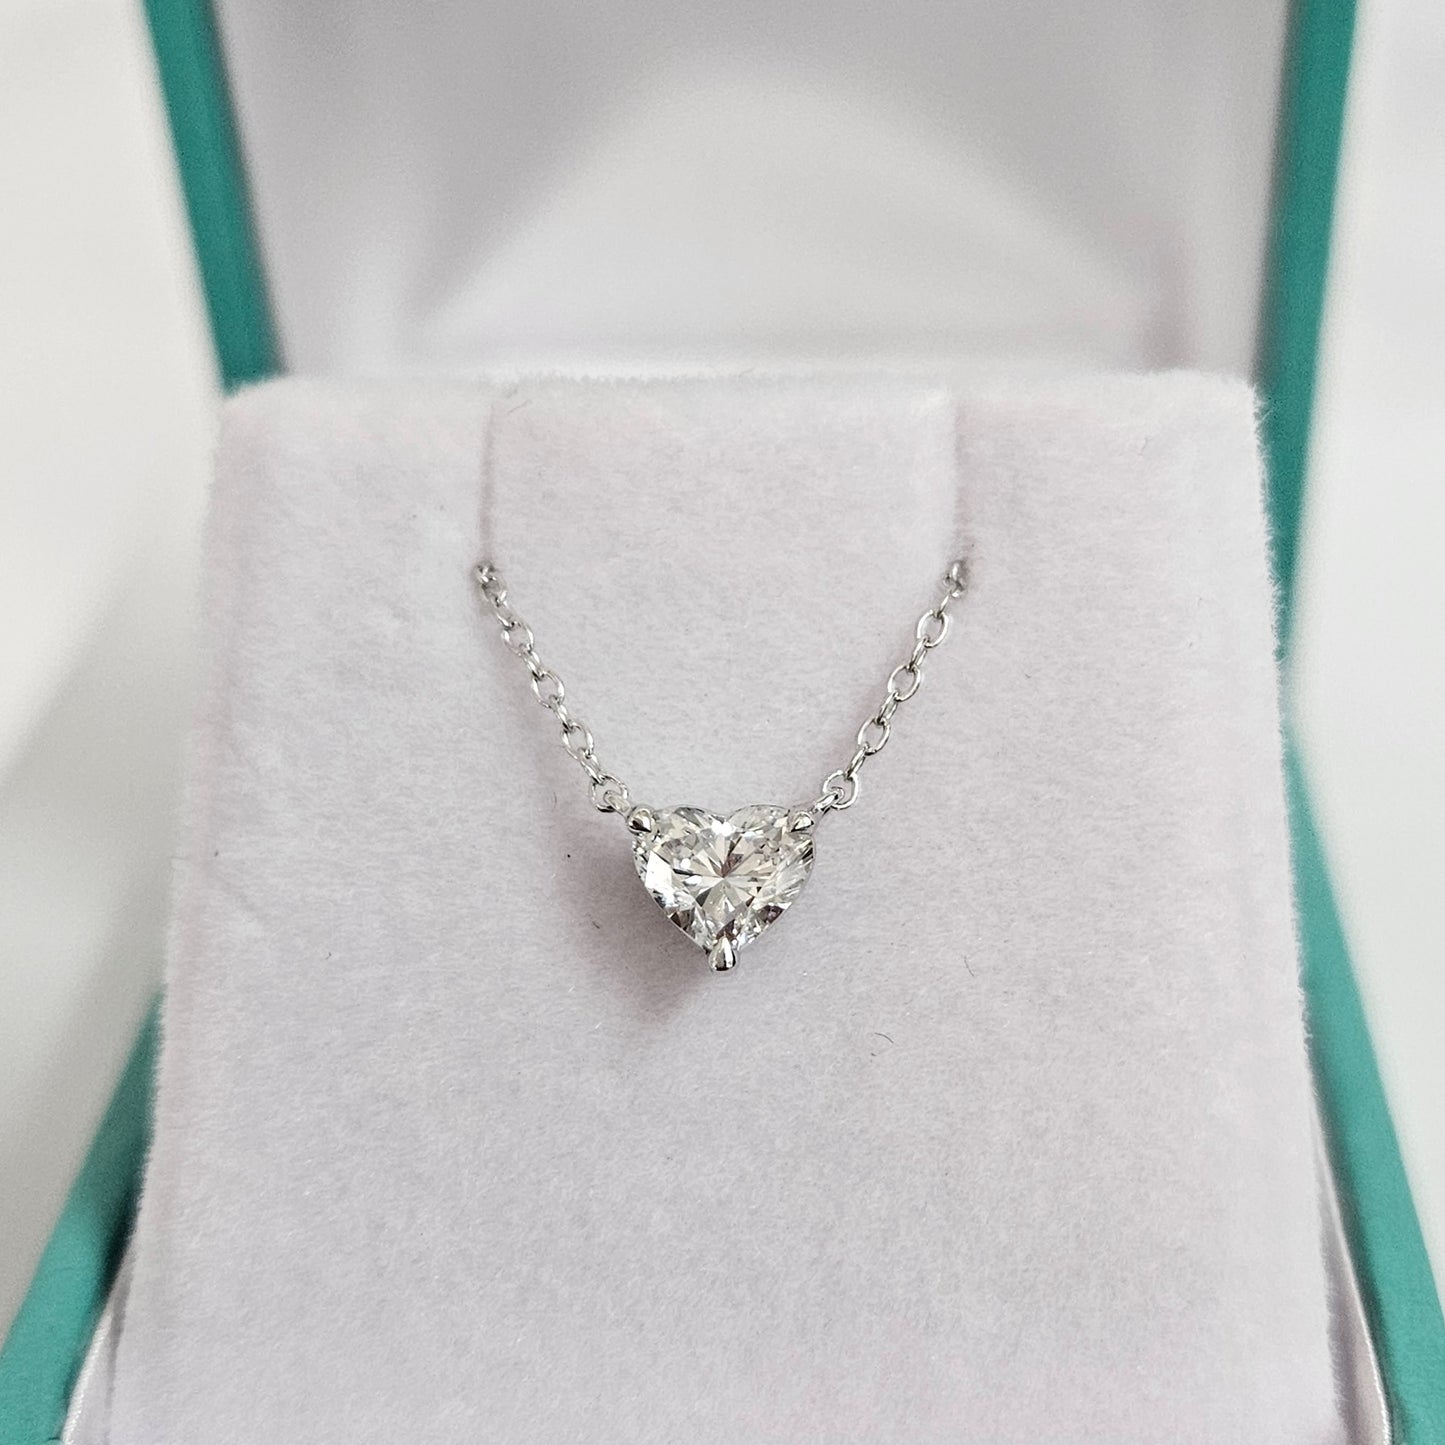 0.5ct Heart Lab Grown Diamond Necklace/14K 18K Gold 3 Prong Setting Heart-Shaped Diamond Pendant/Solitaire Diamond Pendant/Anniversary Gift